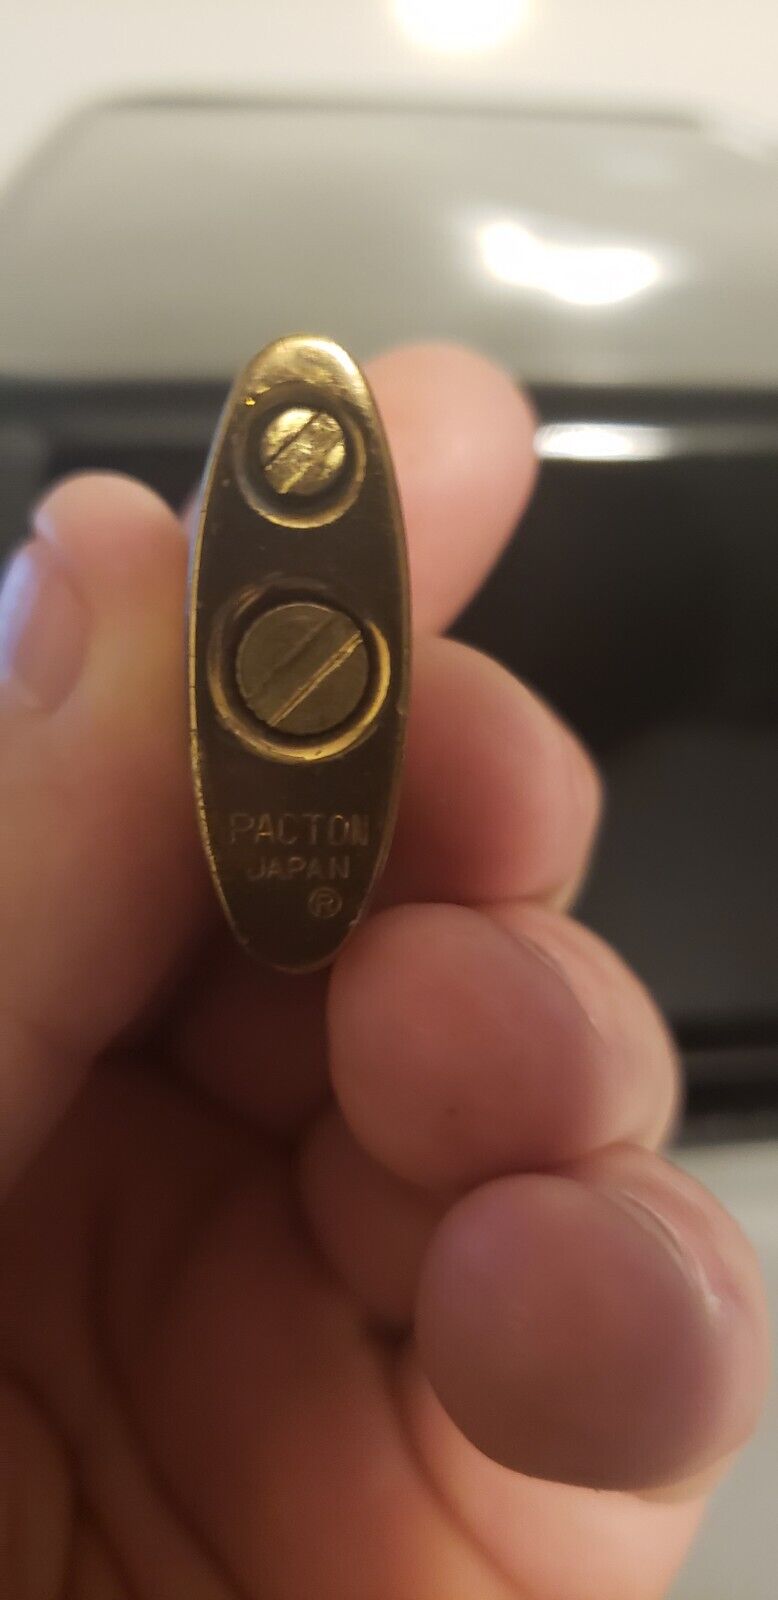 Vintage BRASS Cigarette lighters - PACTON - Japan missing key chain